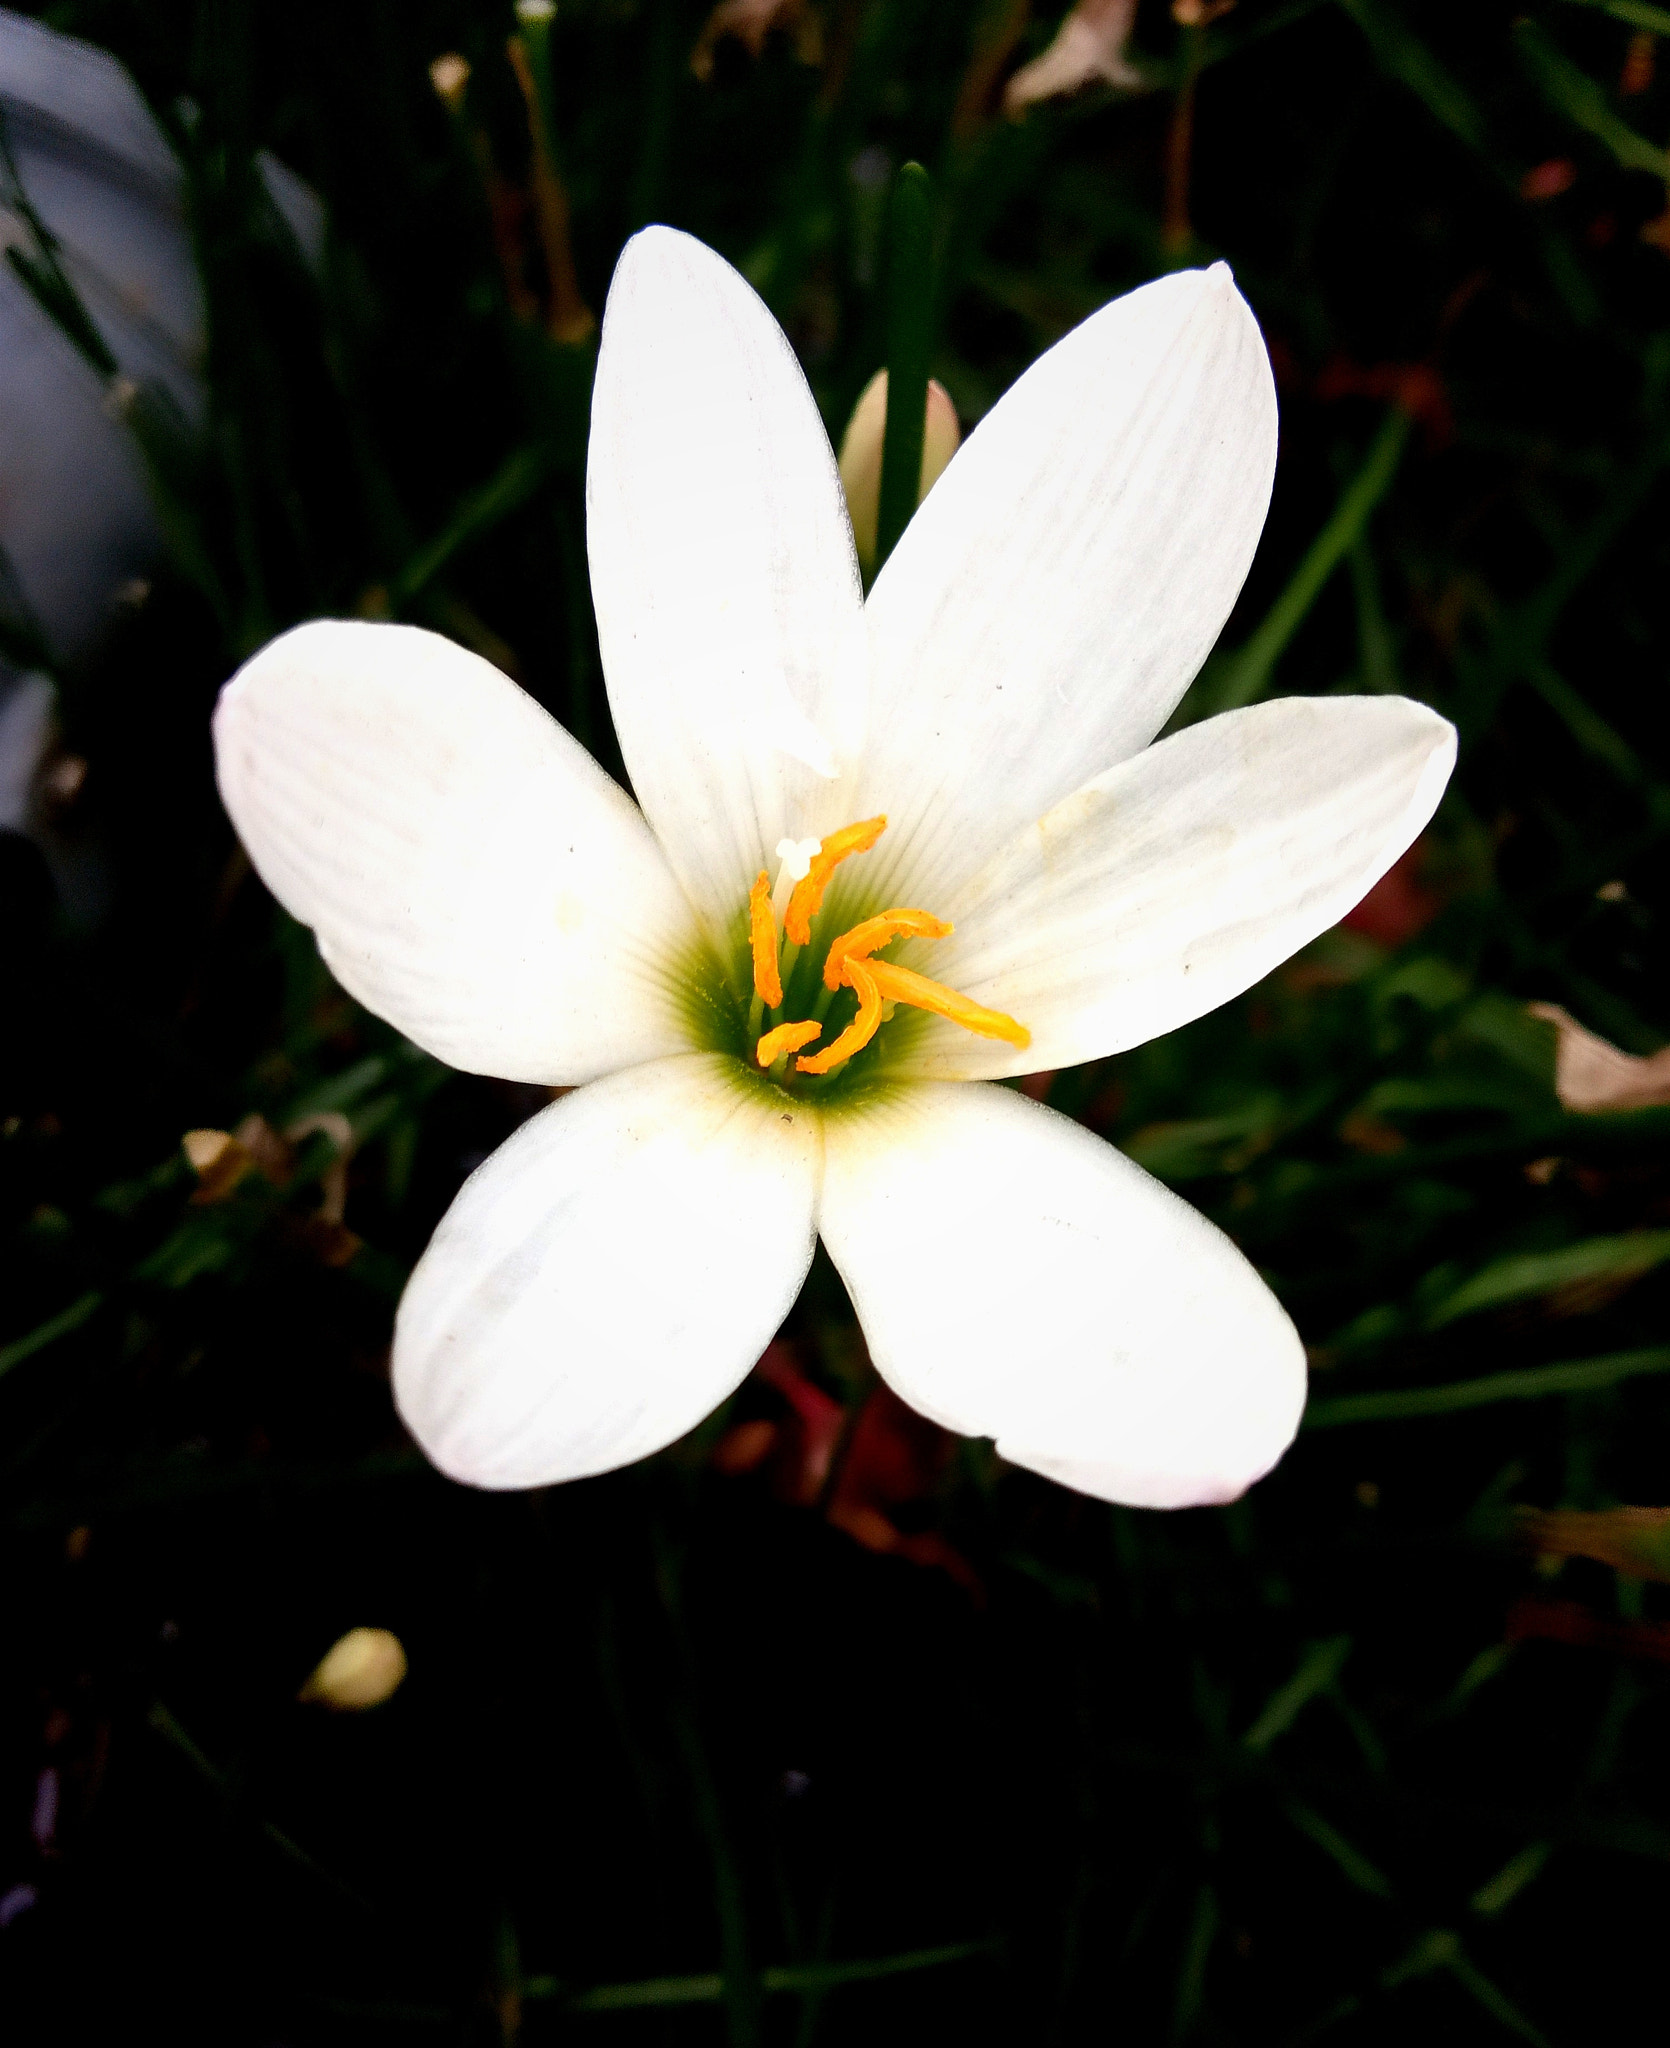 vivo 1601 sample photo. White flower photography